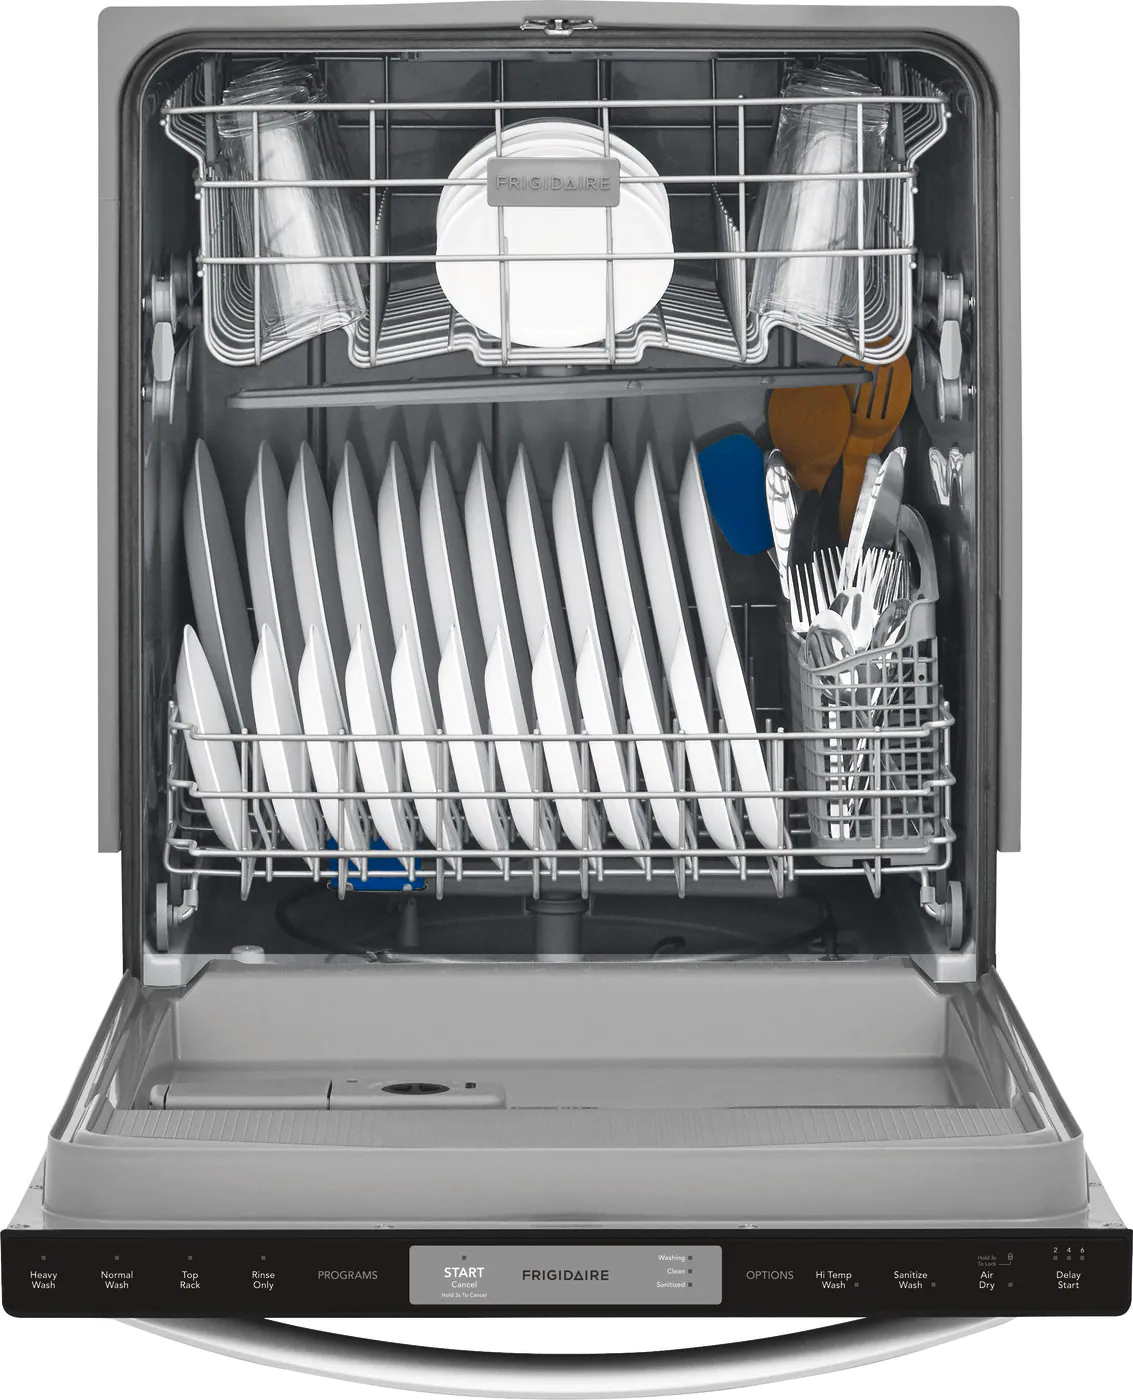 How To Start Frigidaire Dishwasher